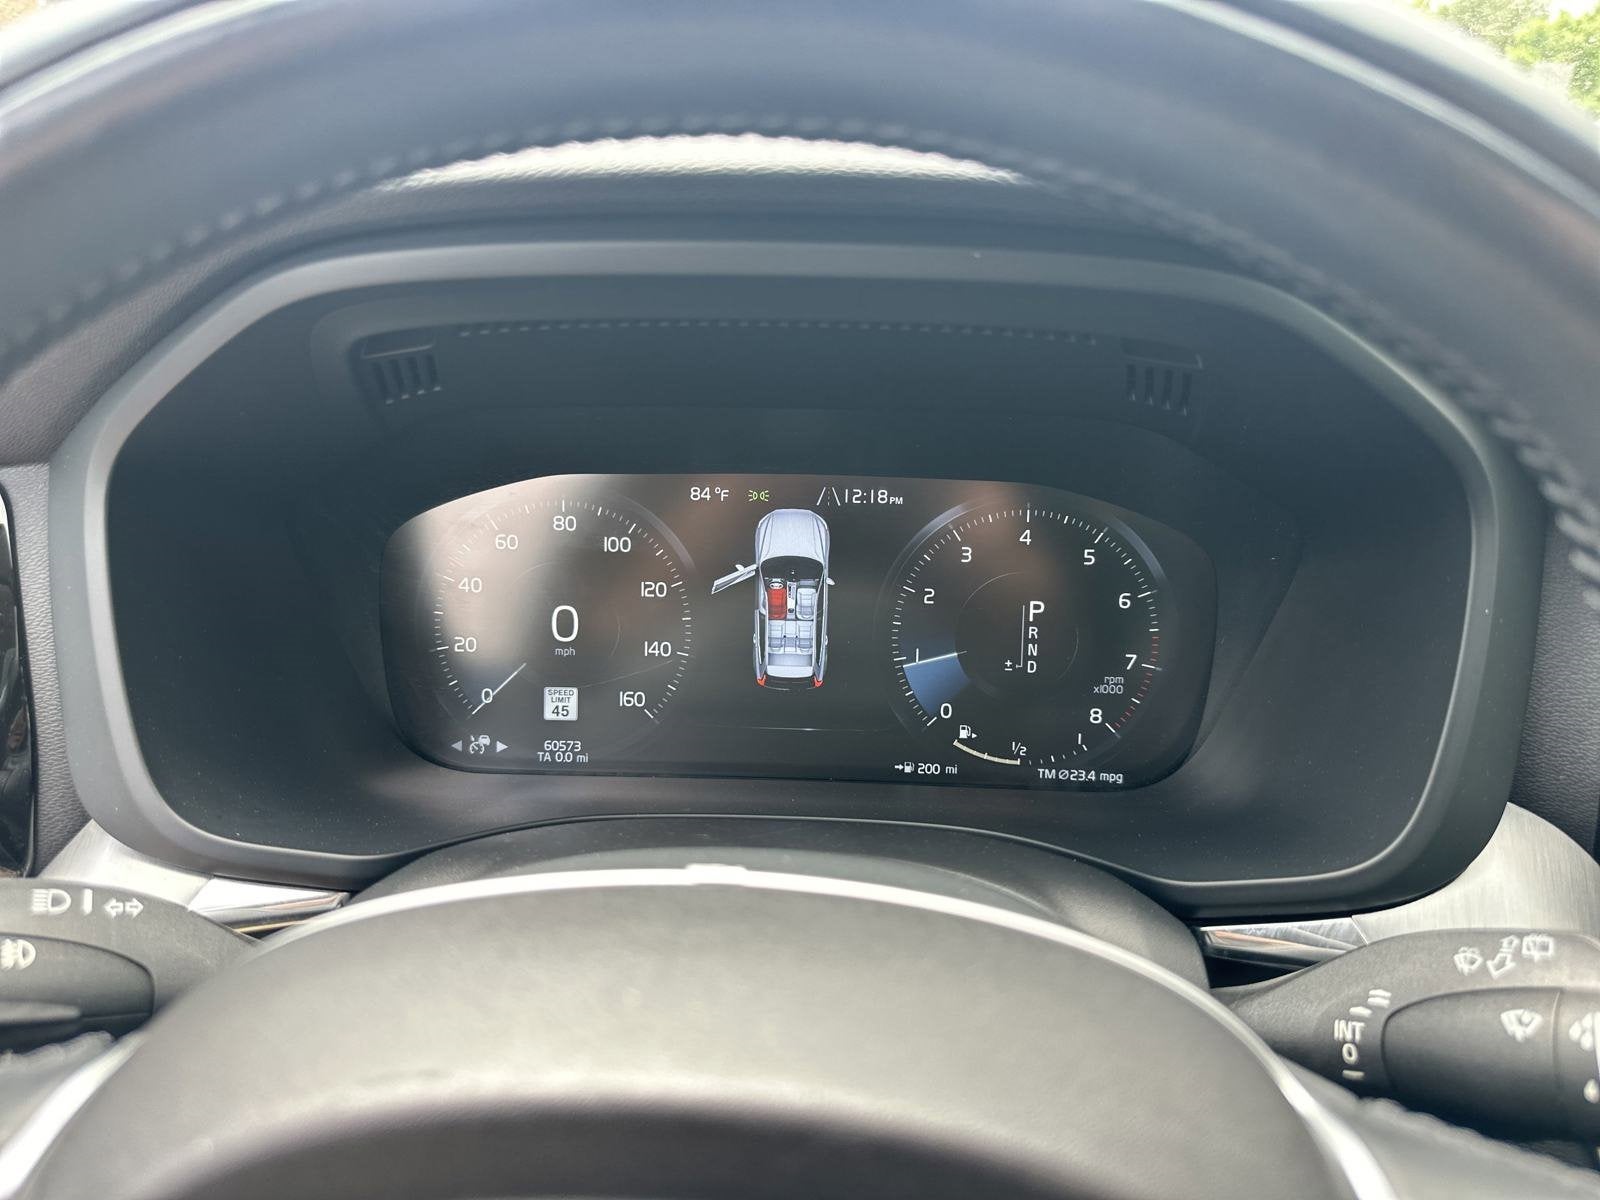 2019 Volvo XC60 T5 Momentum